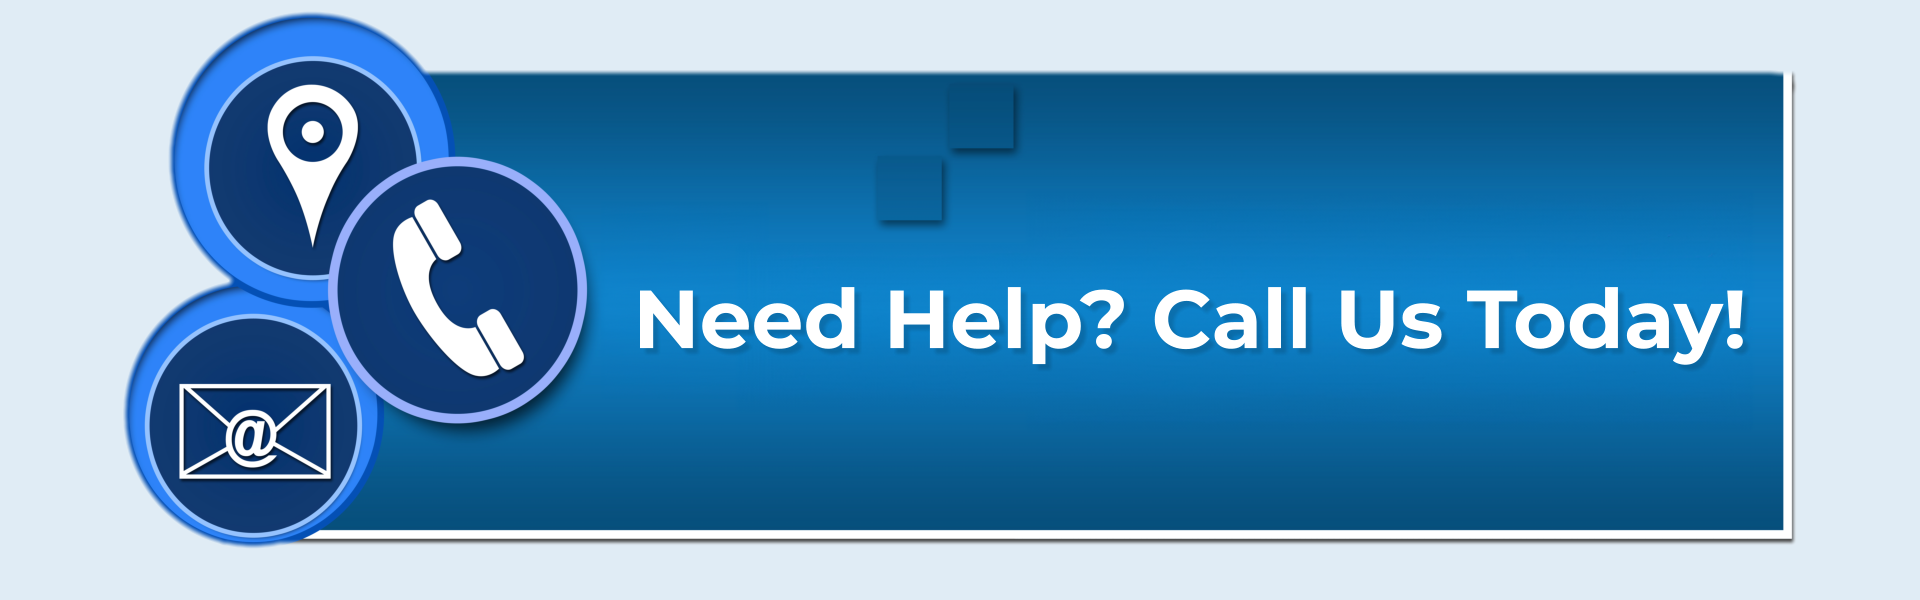 need help? call us today!